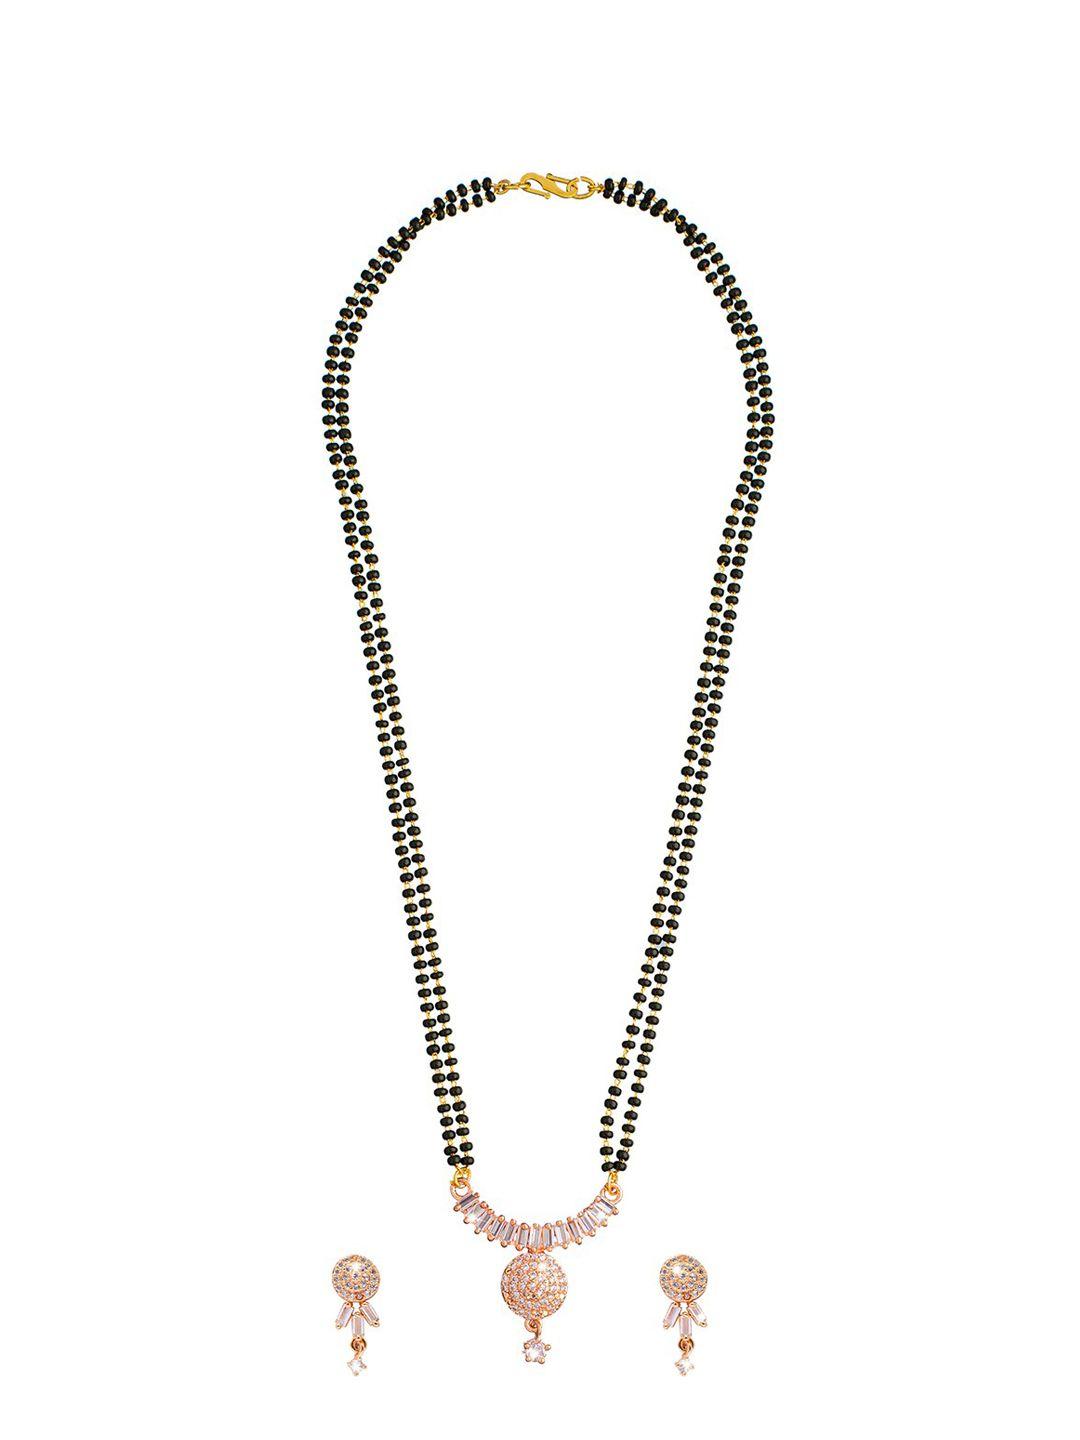 shining jewel - by shivansh rose gold-plated black white stone-studded & beaded mangalsutra set